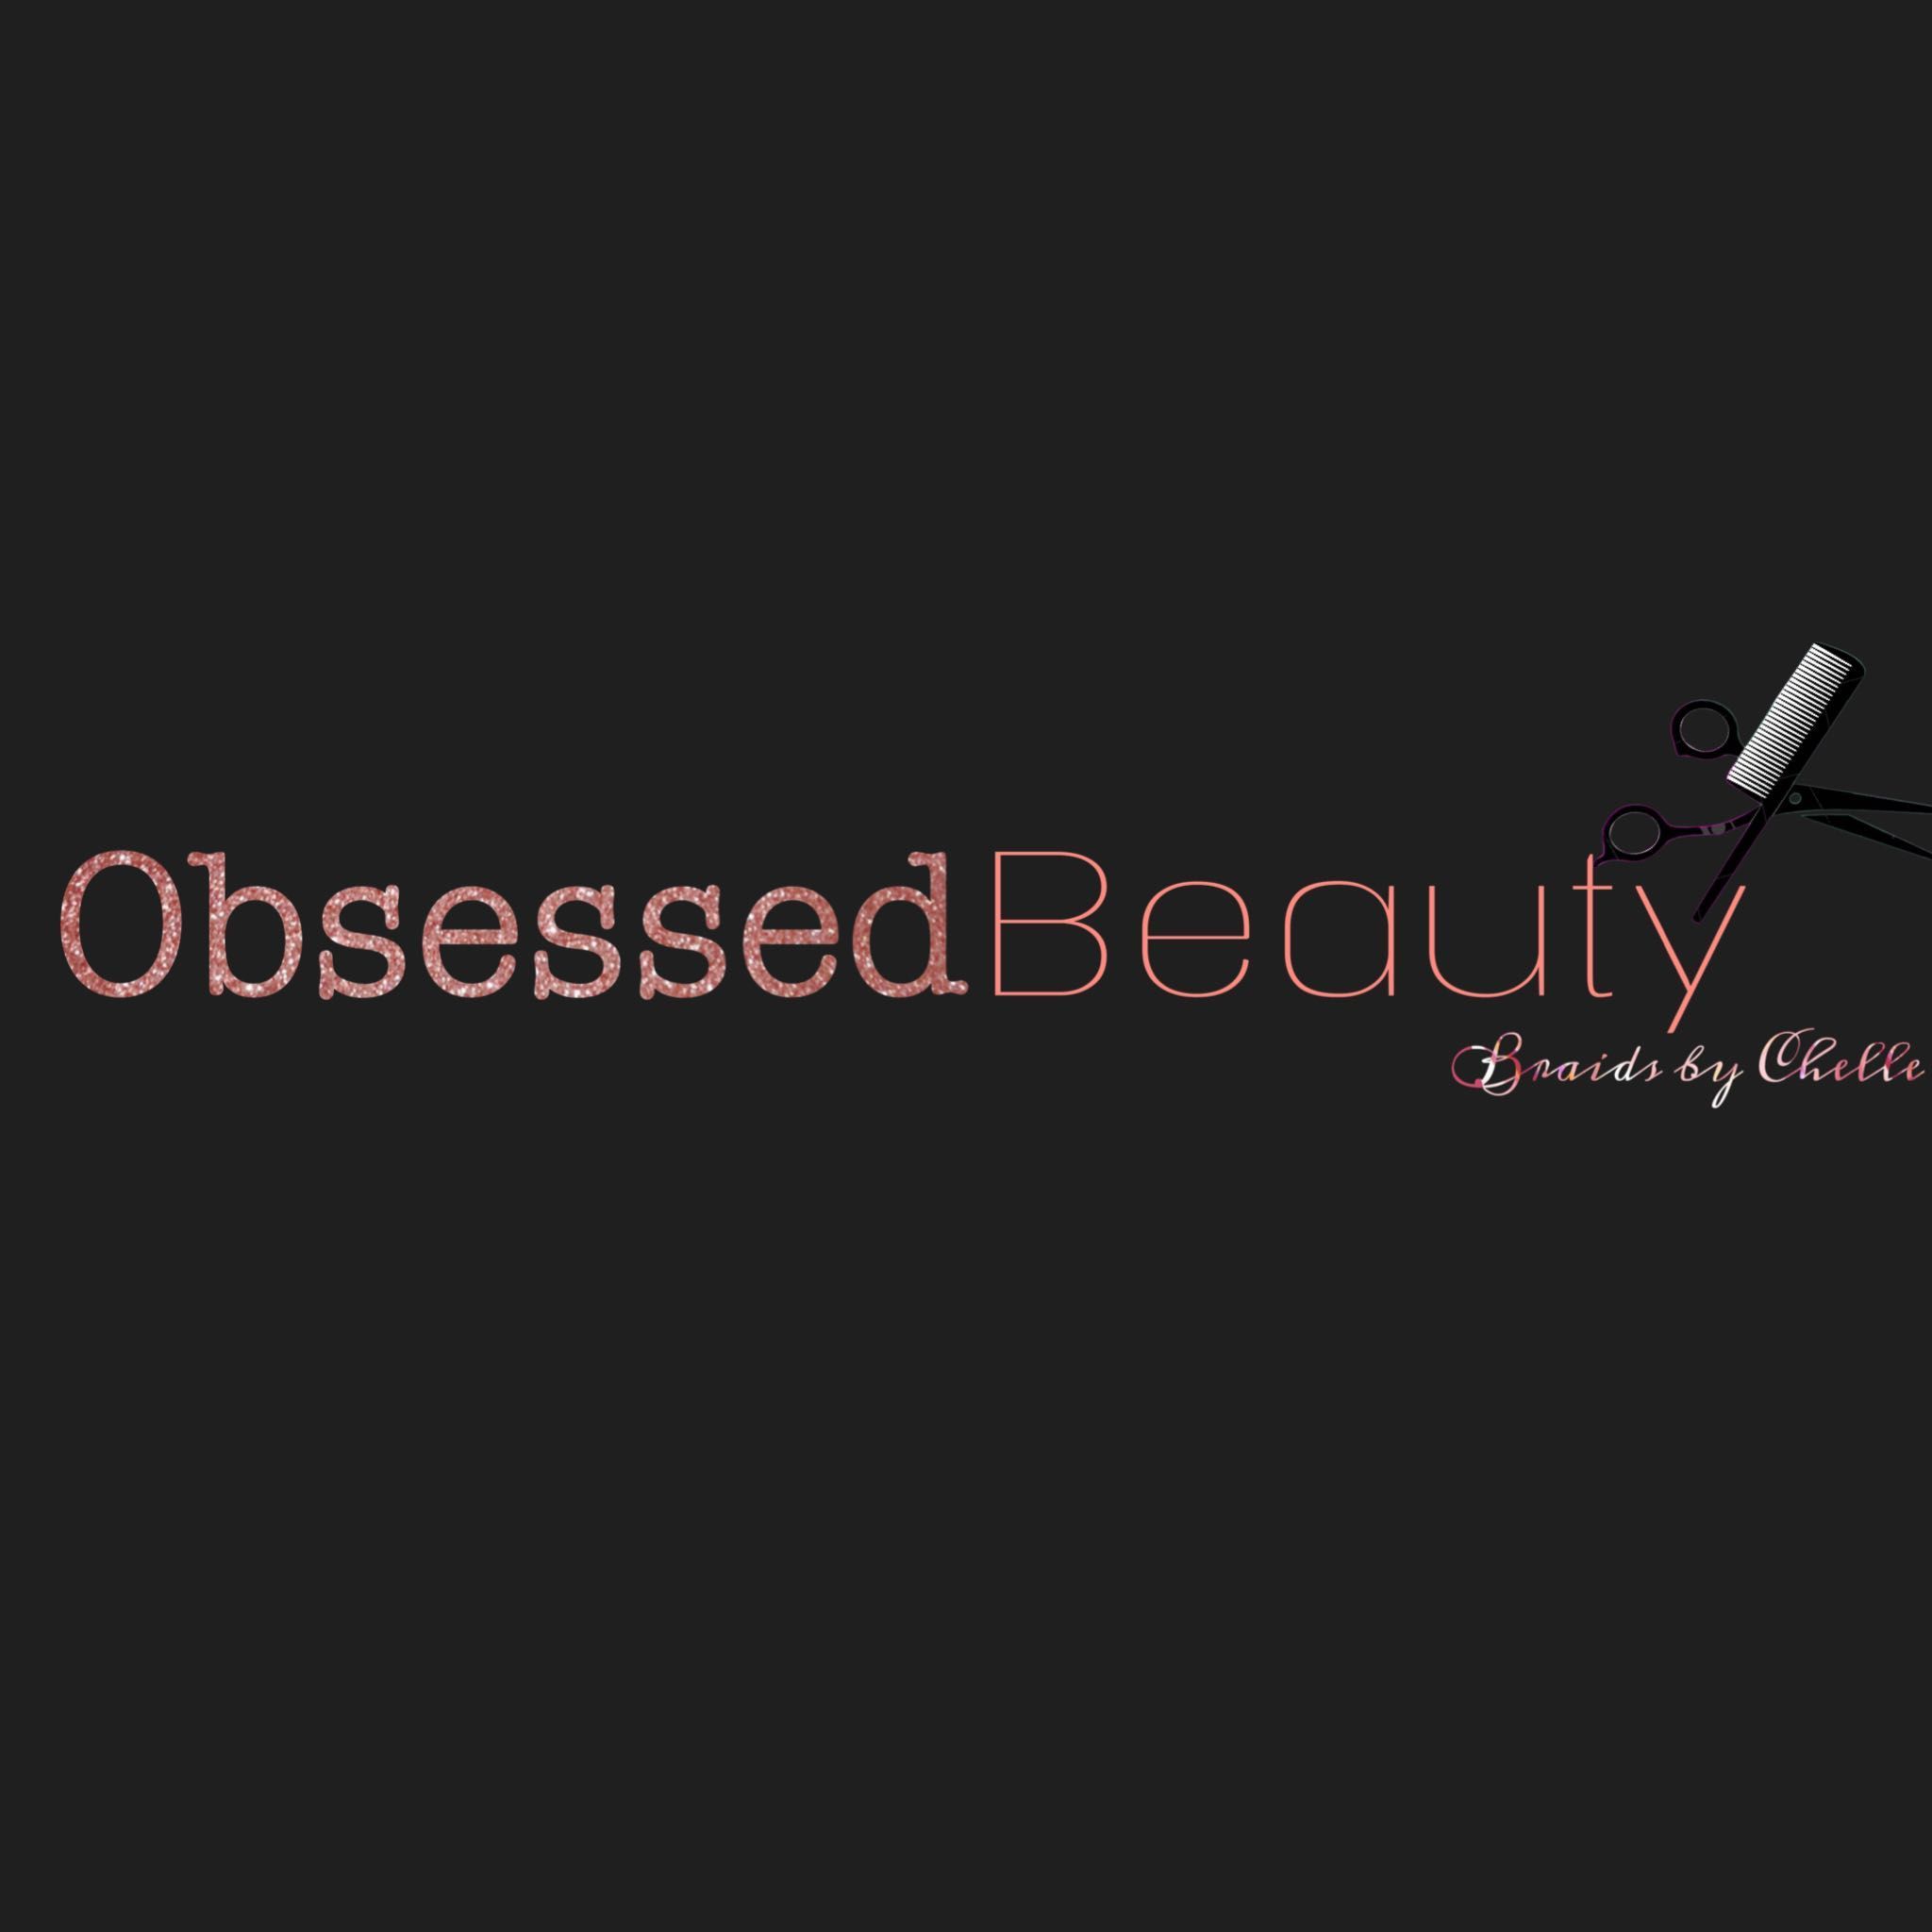 Obsessed Beauty llc, 605 w Edison road, Suit b, Mishawaka, 46545